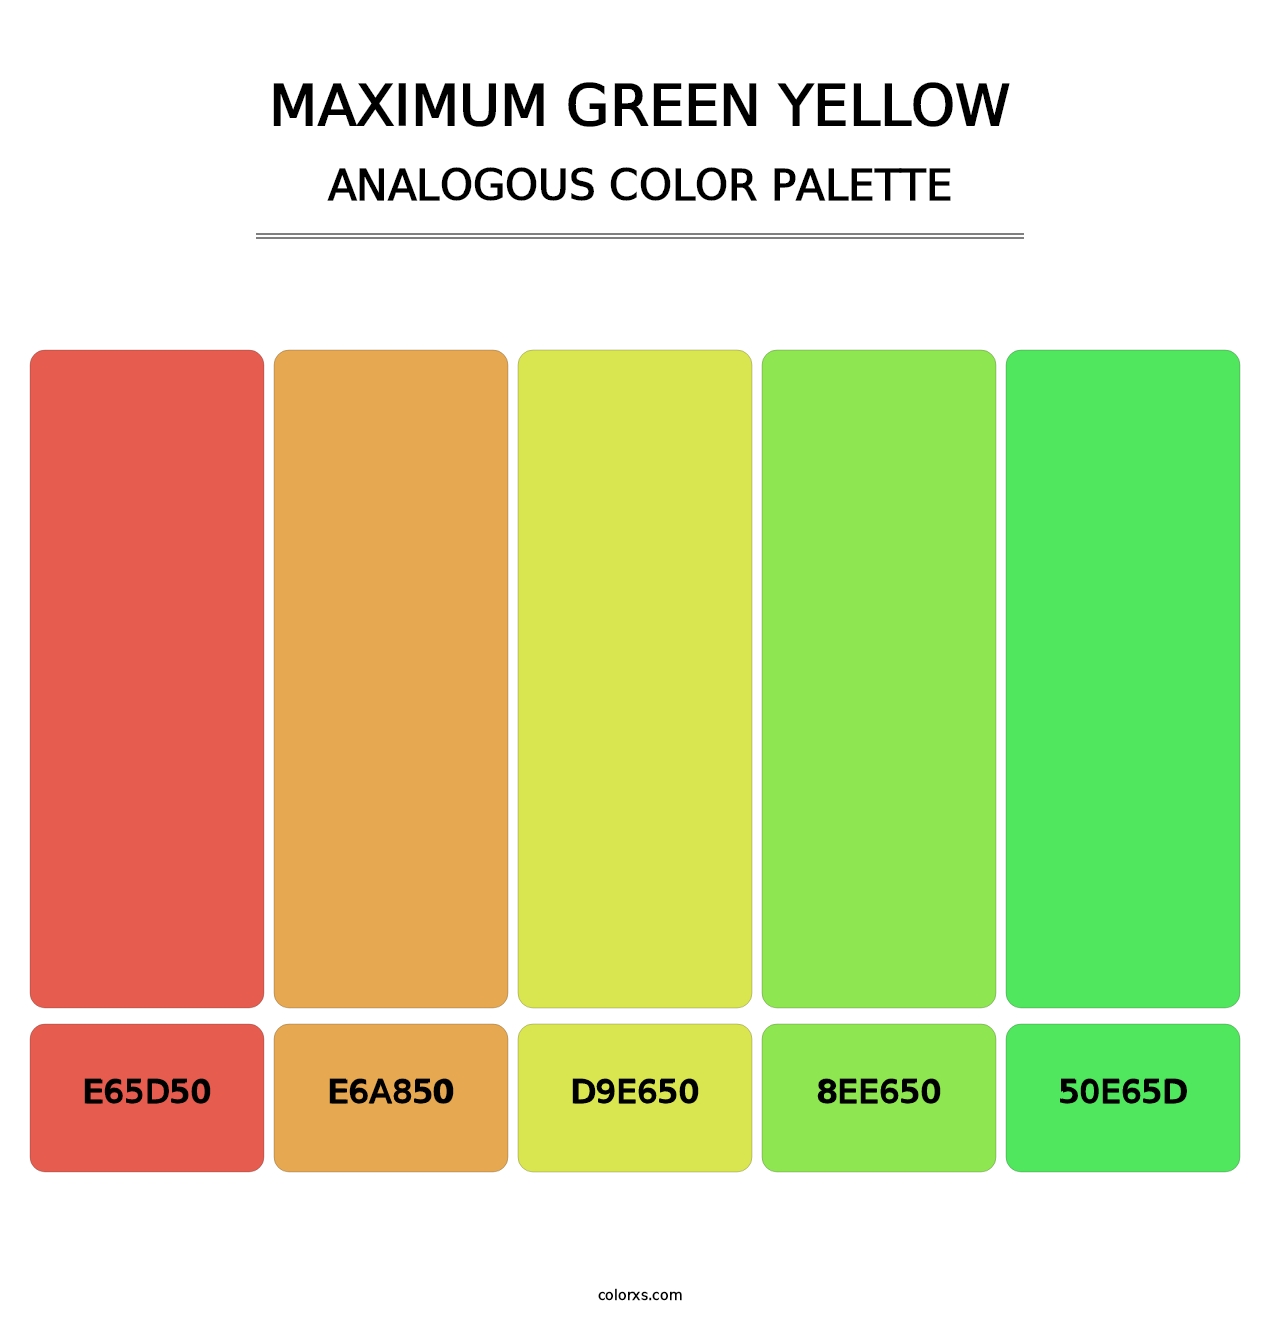 Maximum Green Yellow - Analogous Color Palette